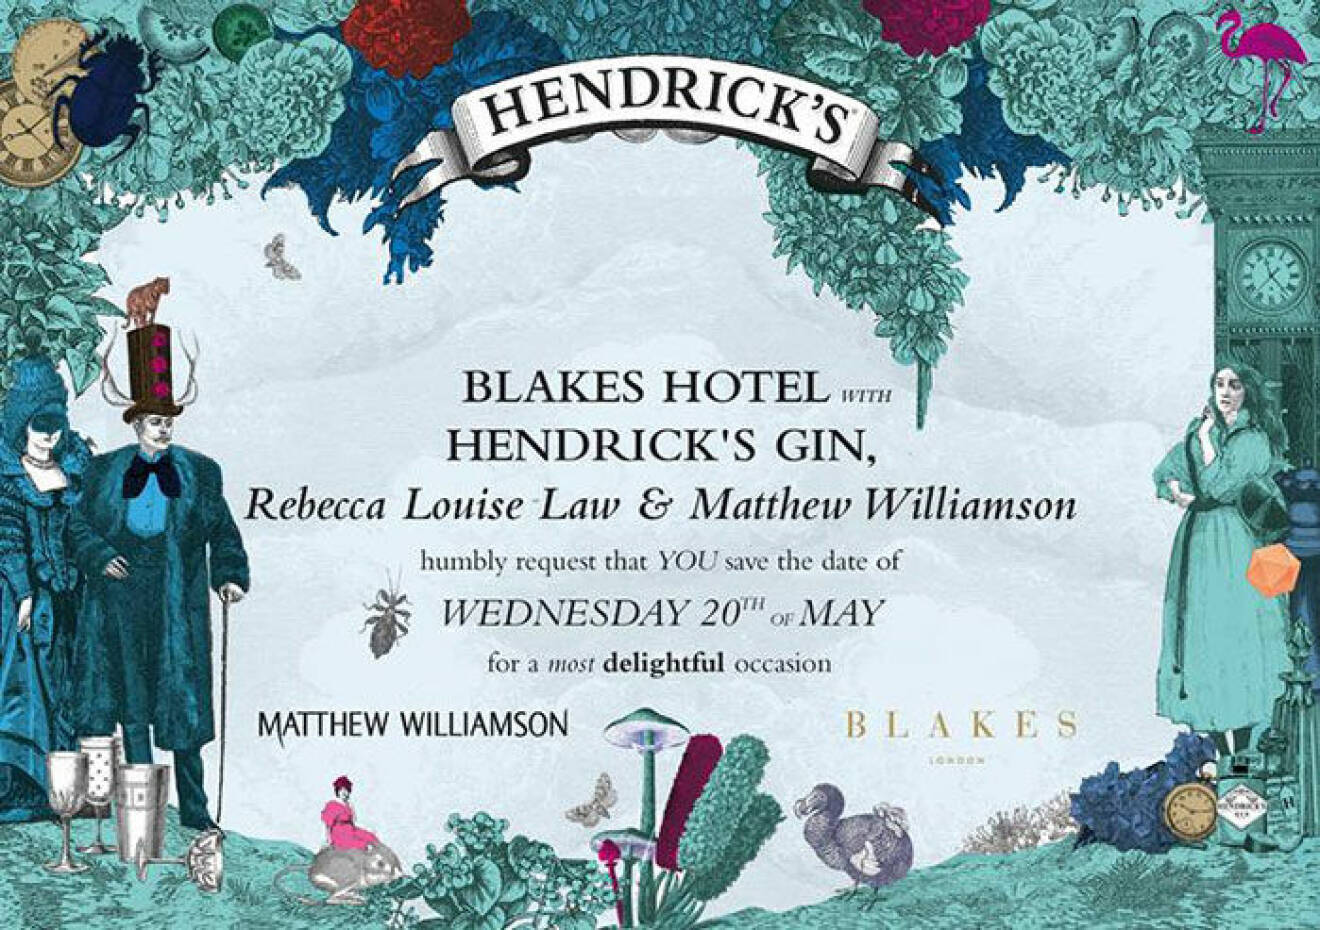 matthew-williamson-blakes-hendricks-invite